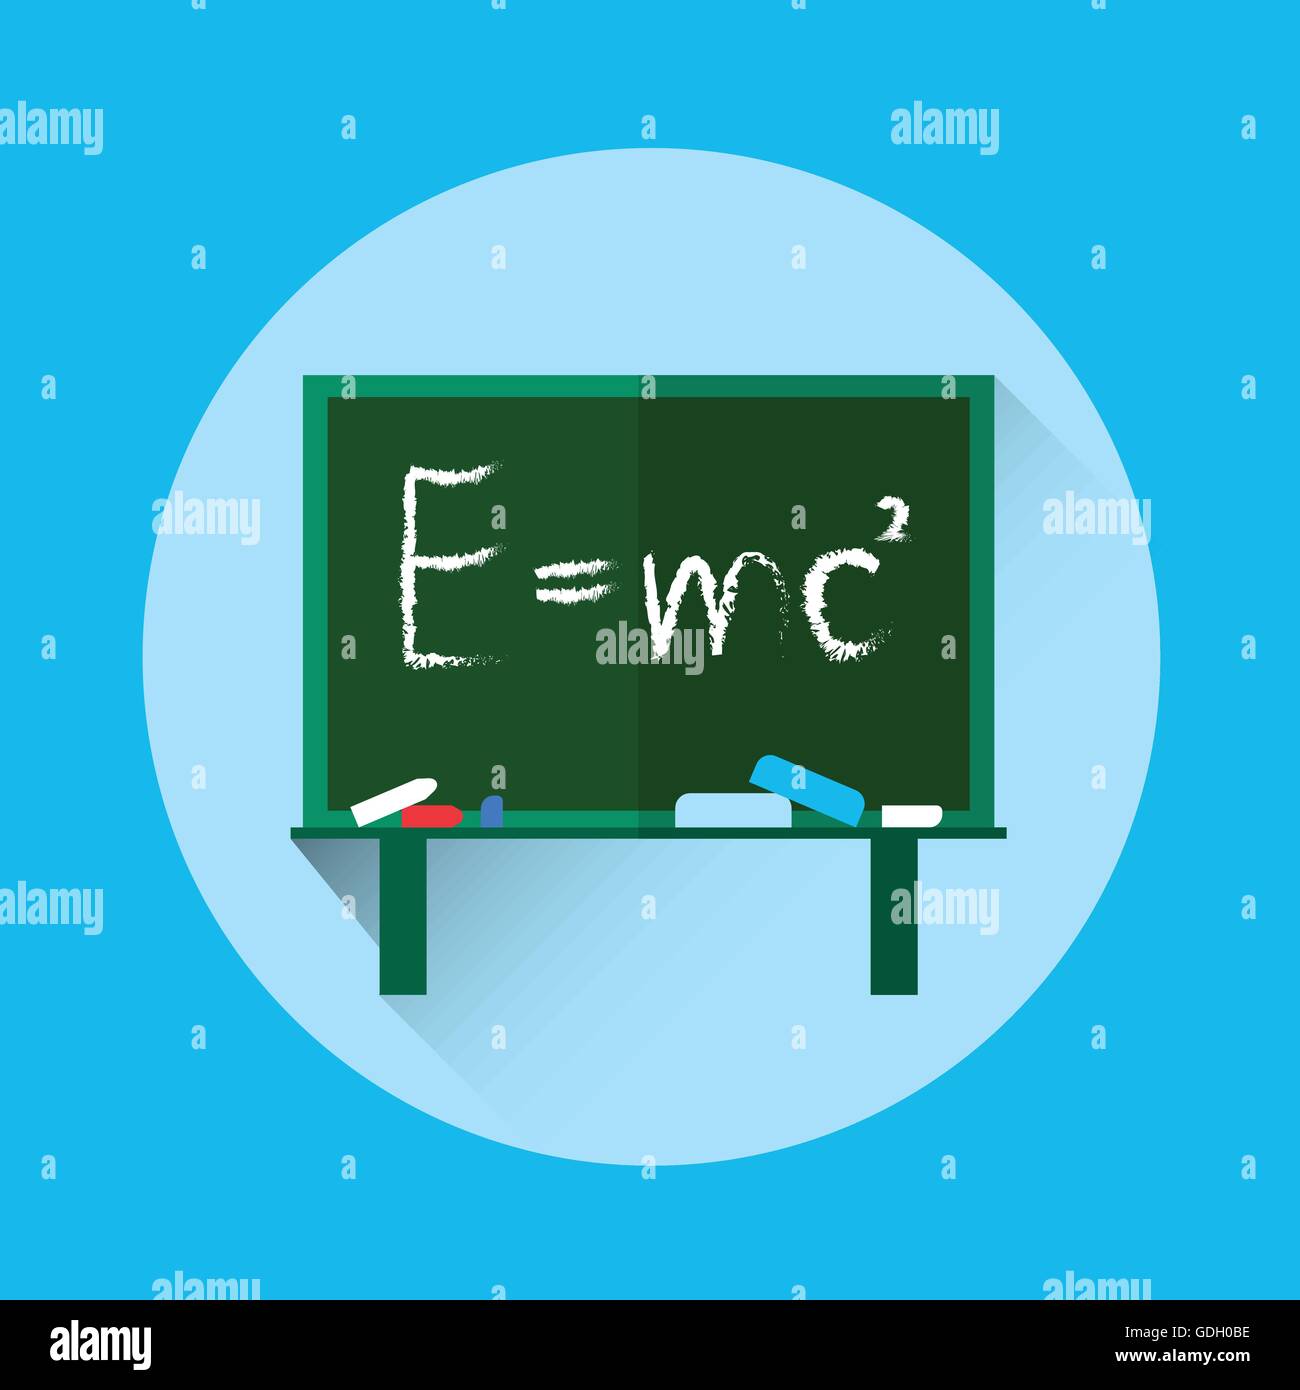 Albert Einsteins Physical Formula on School Board Mass Energy Equivalence Stock Vector